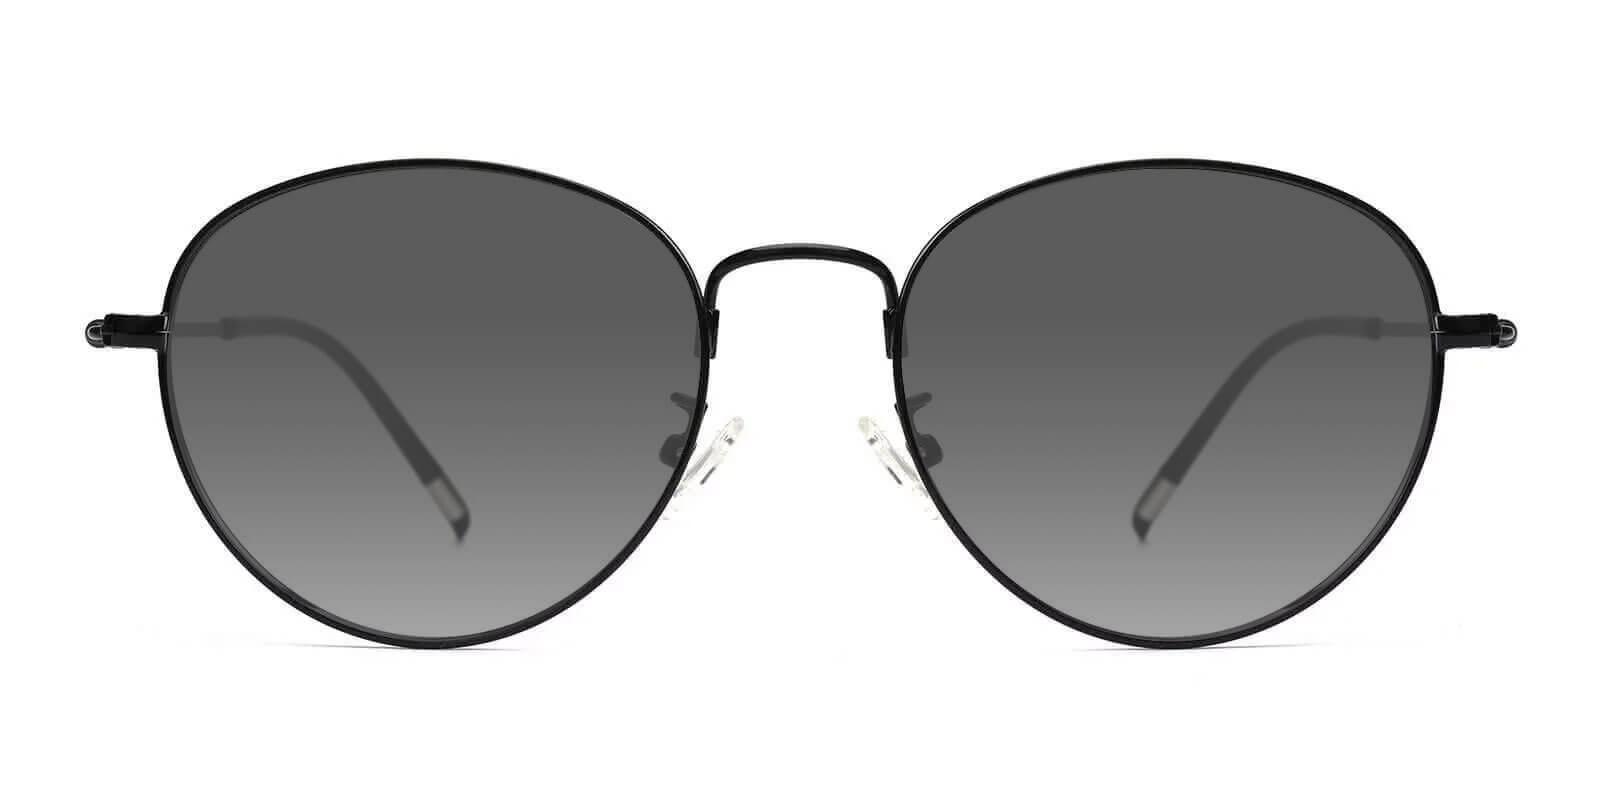 Coxon Black Metal Lightweight , NosePads , Sunglasses Frames from ABBE Glasses